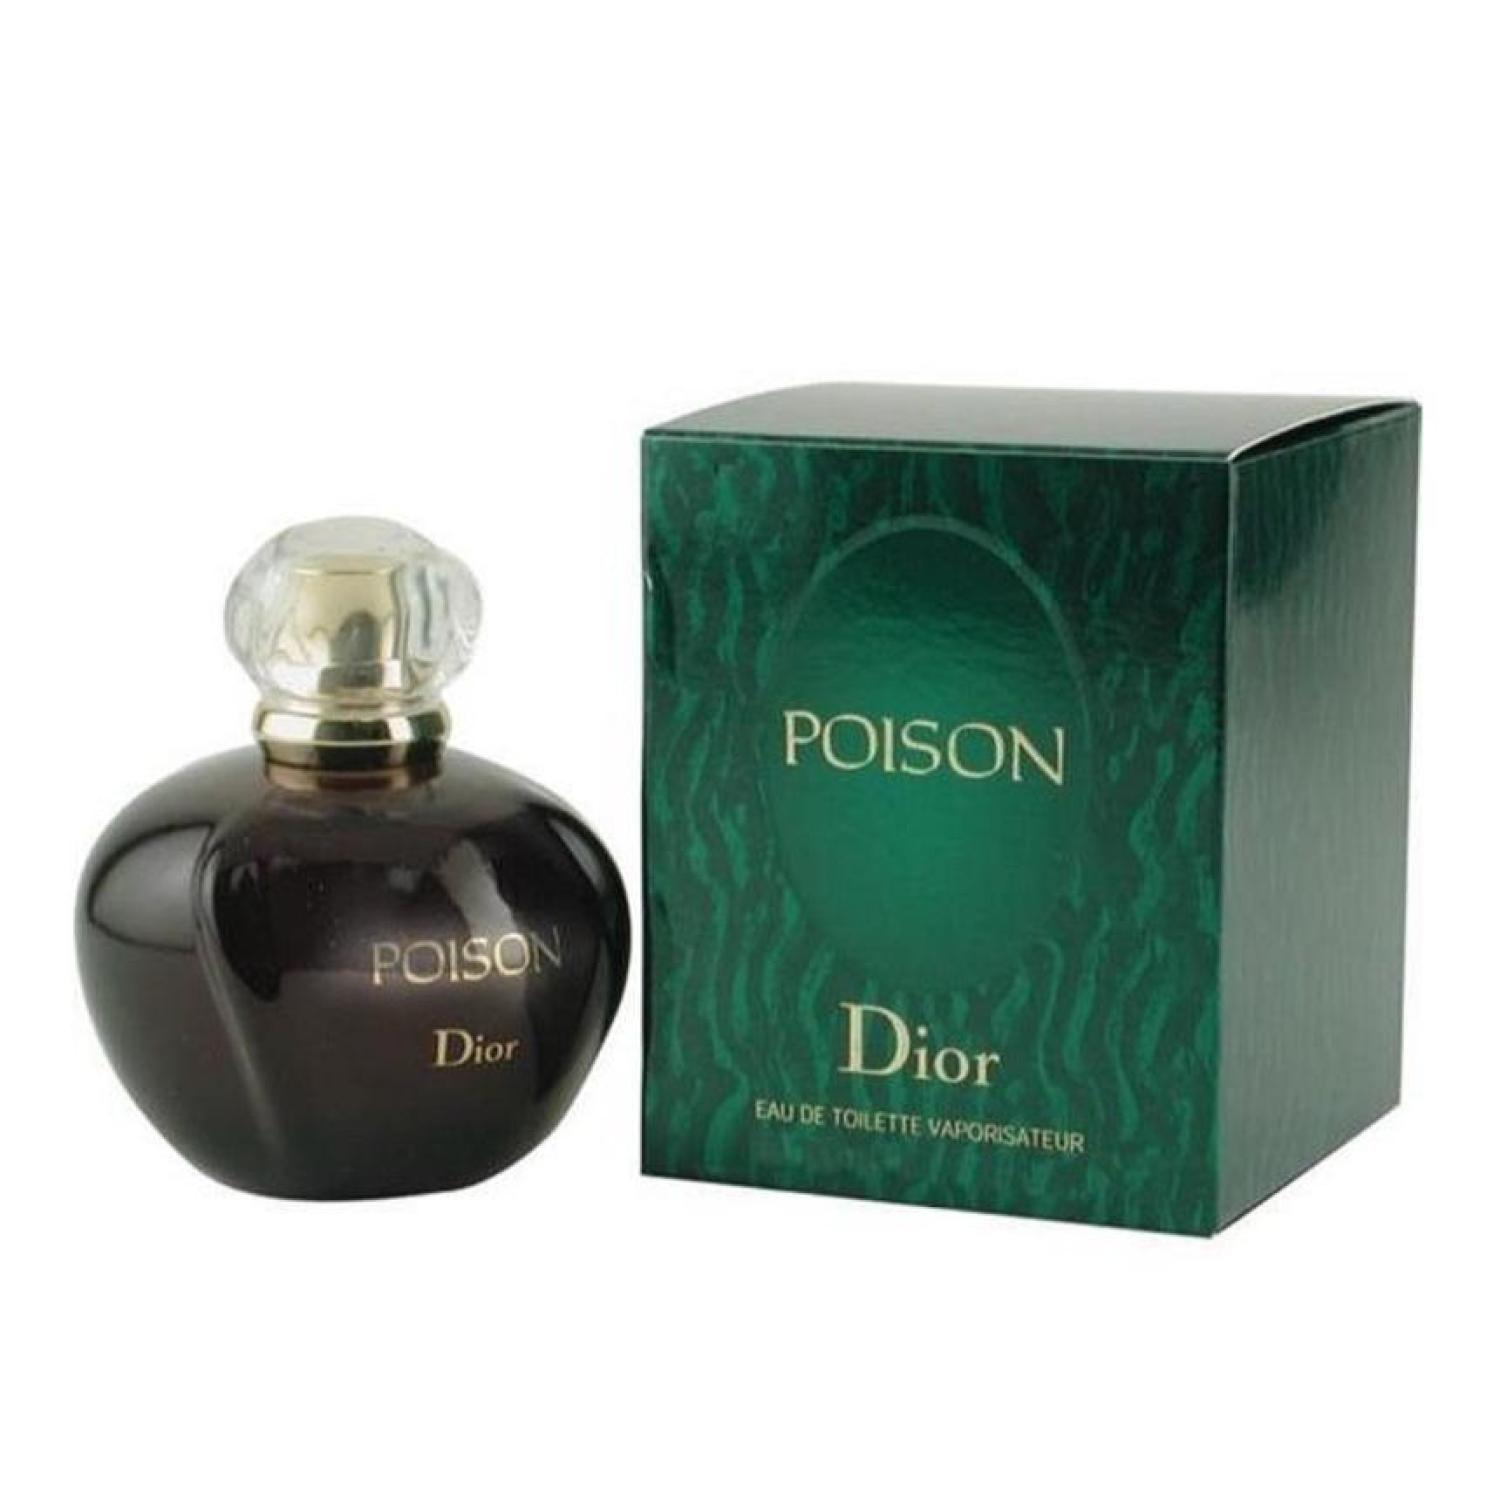 Туалетная вода пуазон. Christian Dior "Poison" 100 ml. Dior Poison 100 ml. Christian Dior Poison EDT (W) 100ml. Dior Poison туалетная вода 100.